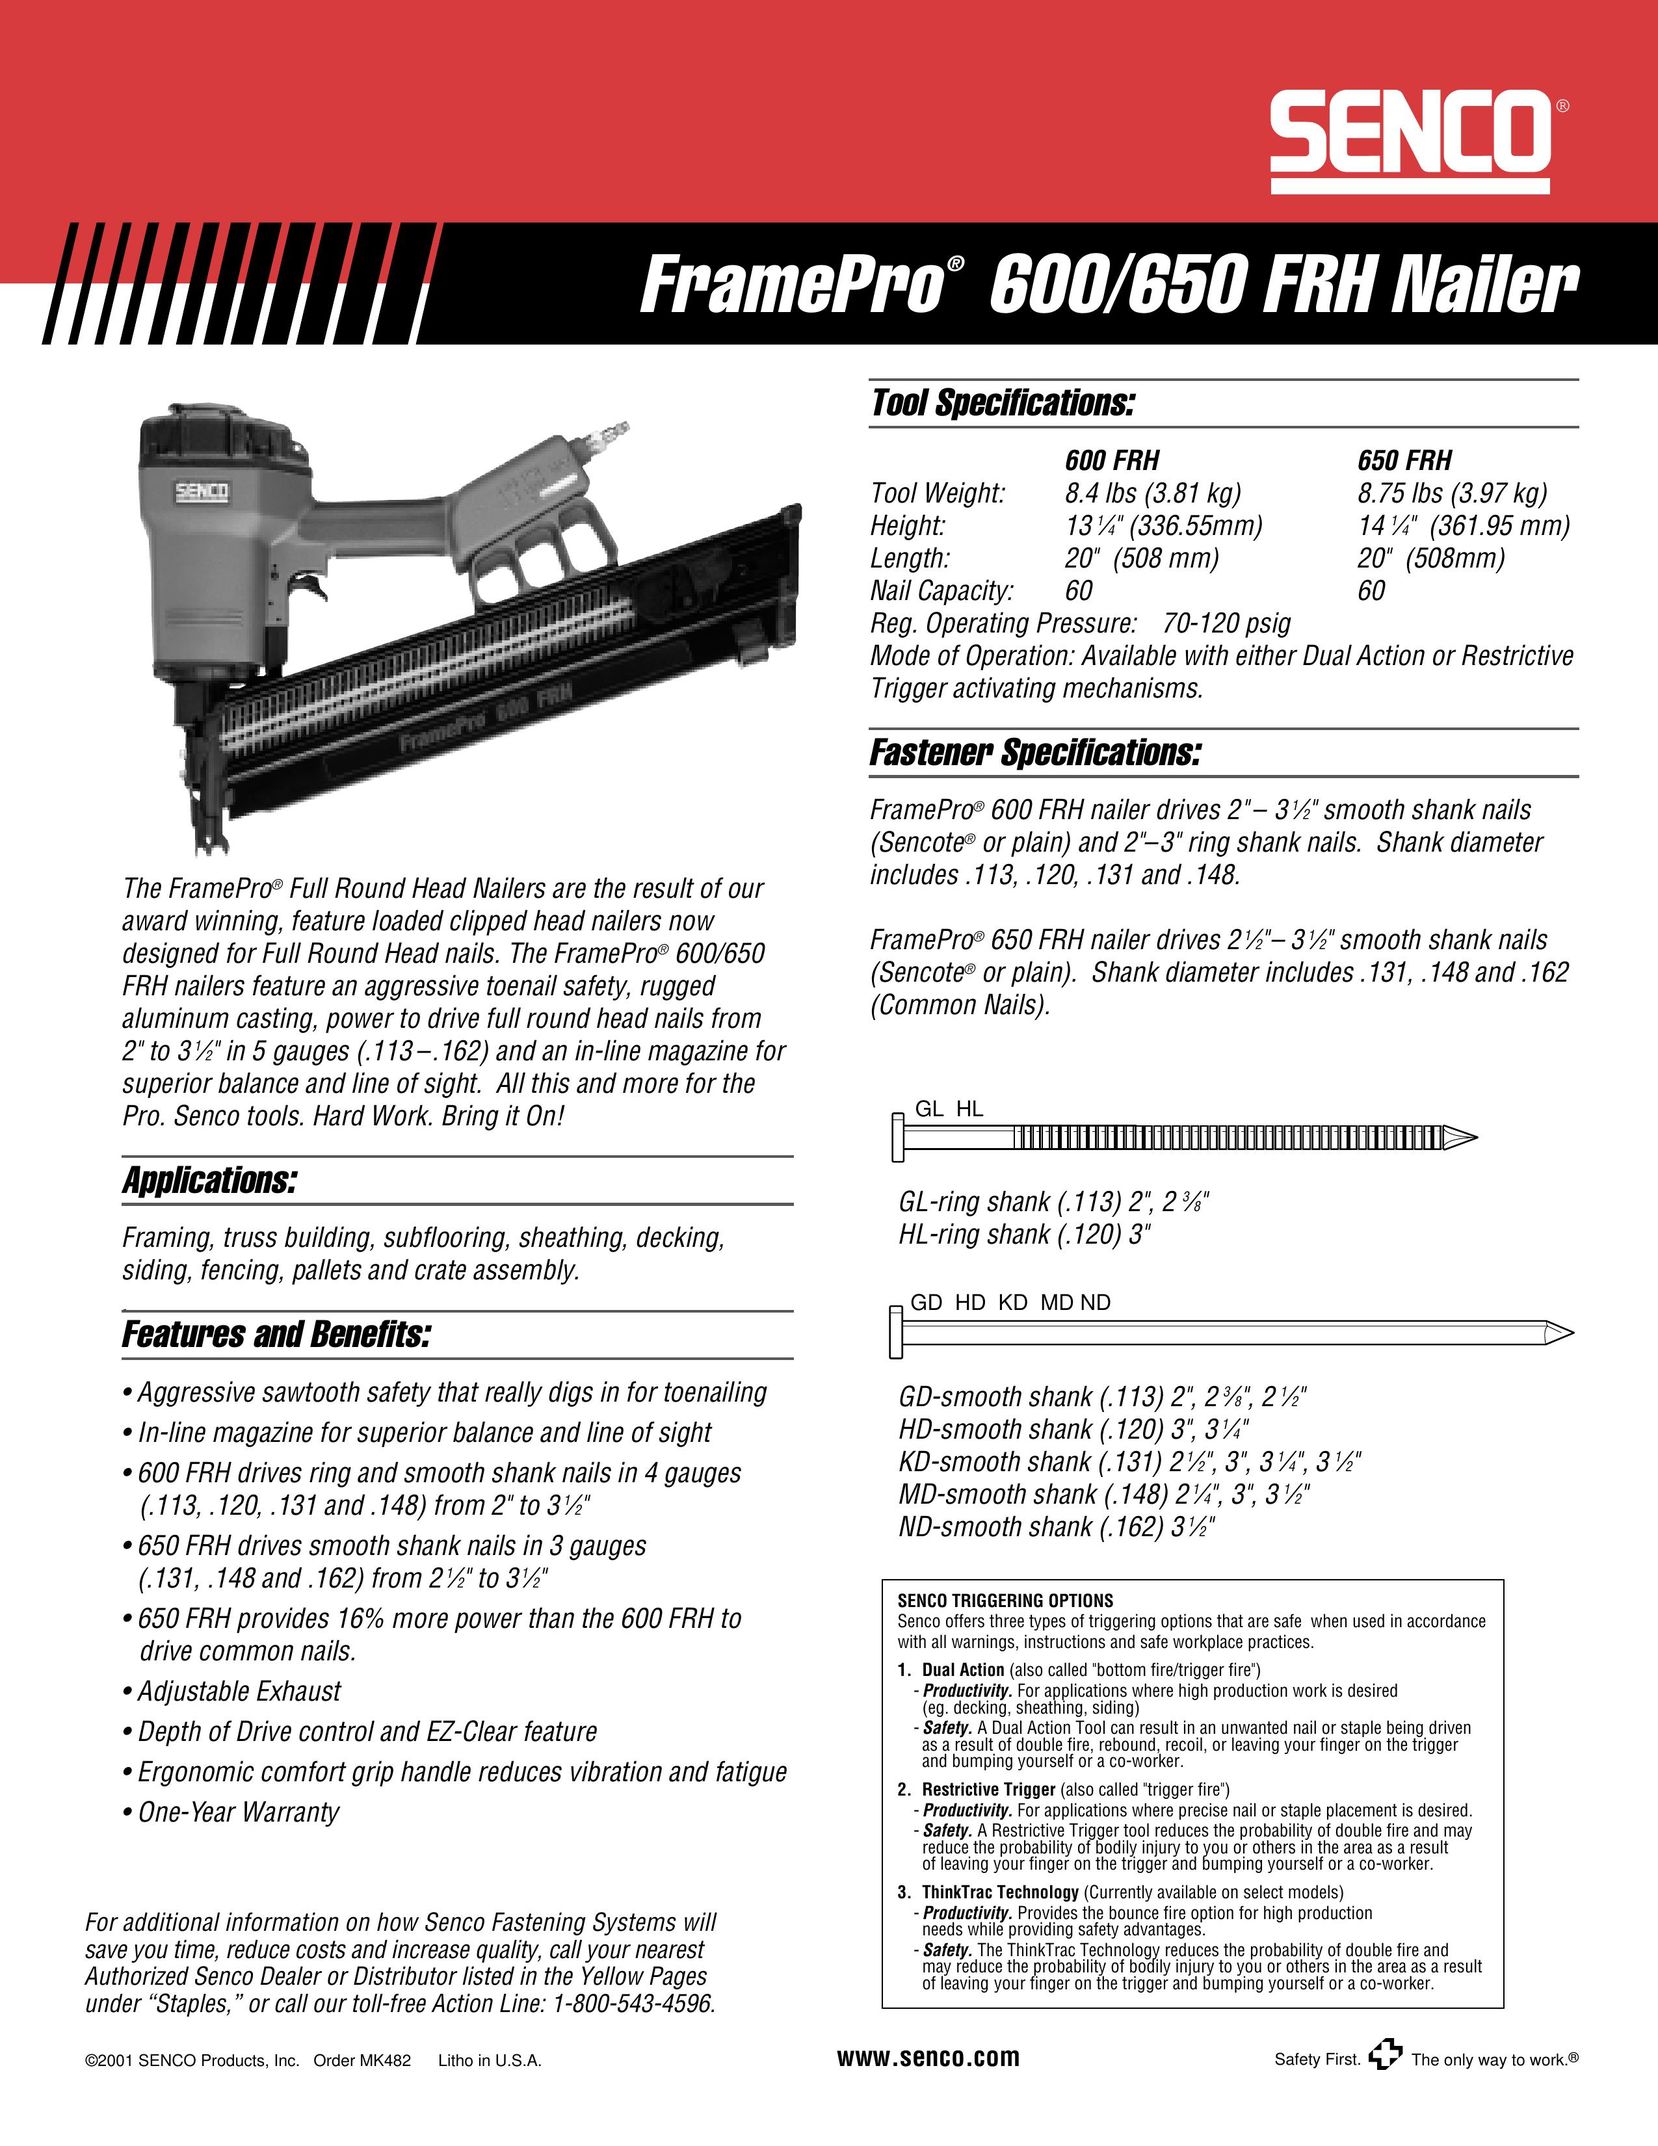 Senco 650 FRH Nail Gun User Manual